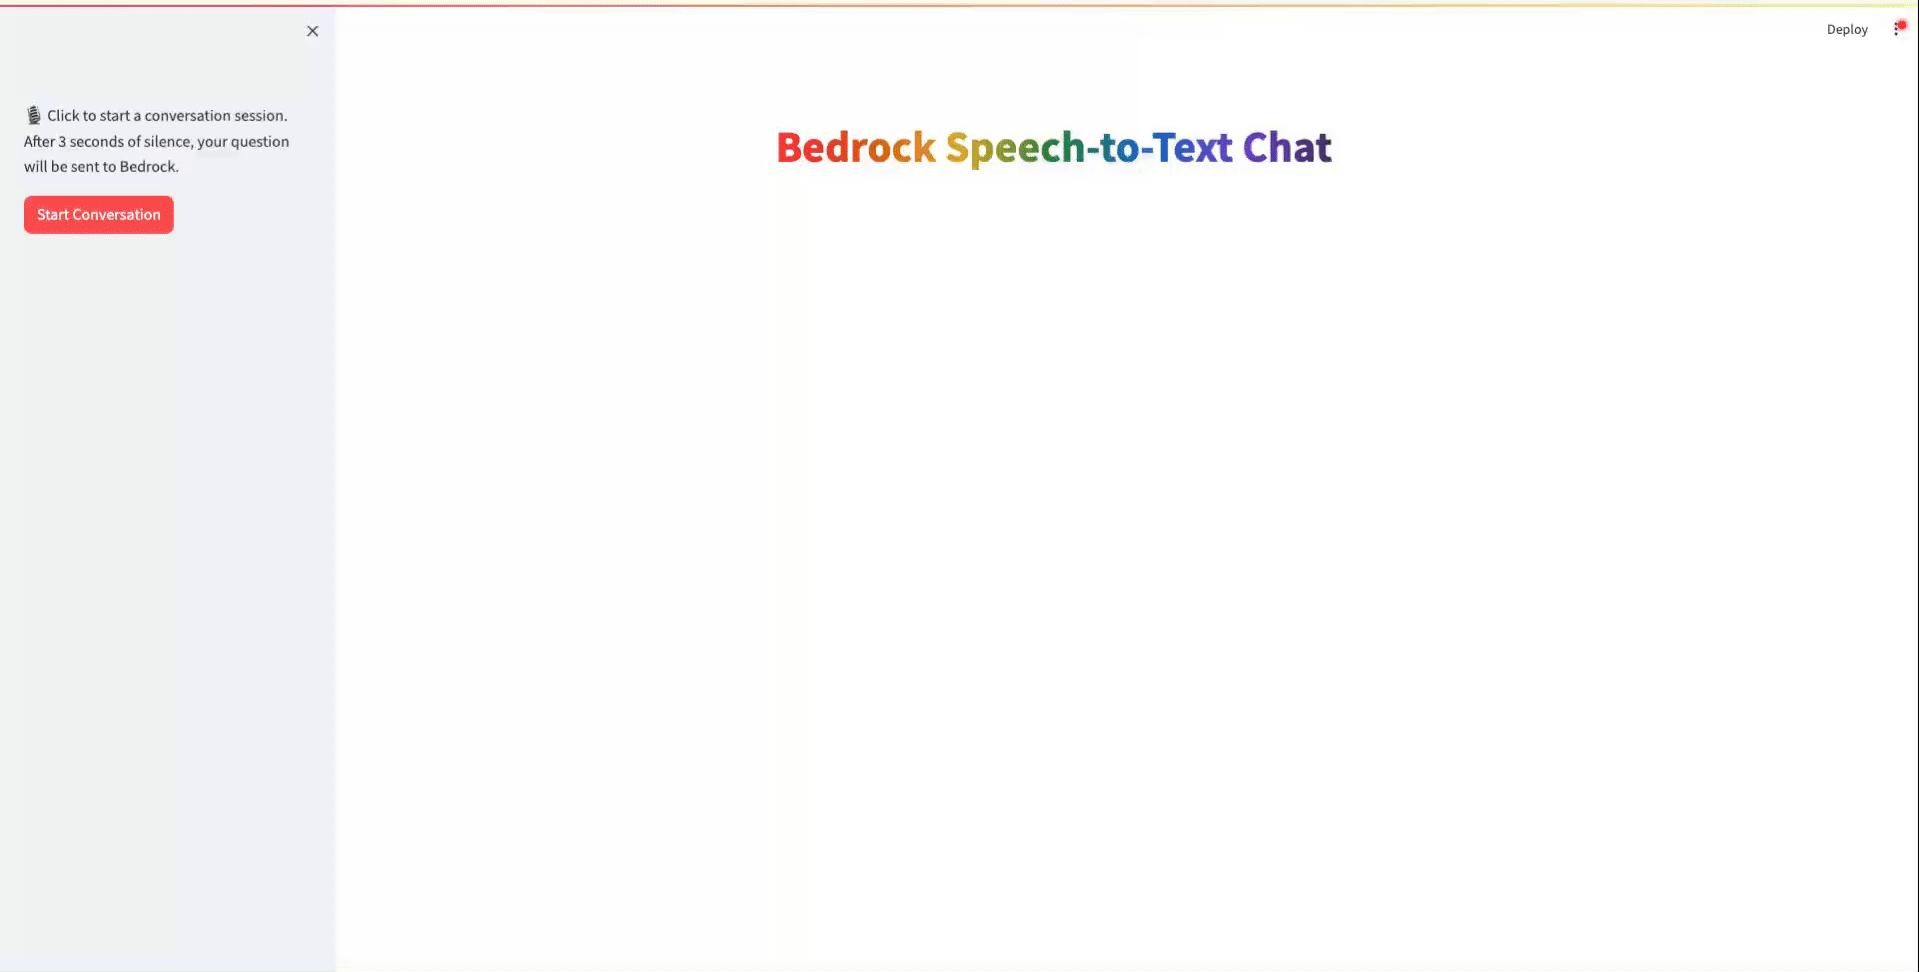 Amazon Bedrock Speech-to-Text Chat Demo